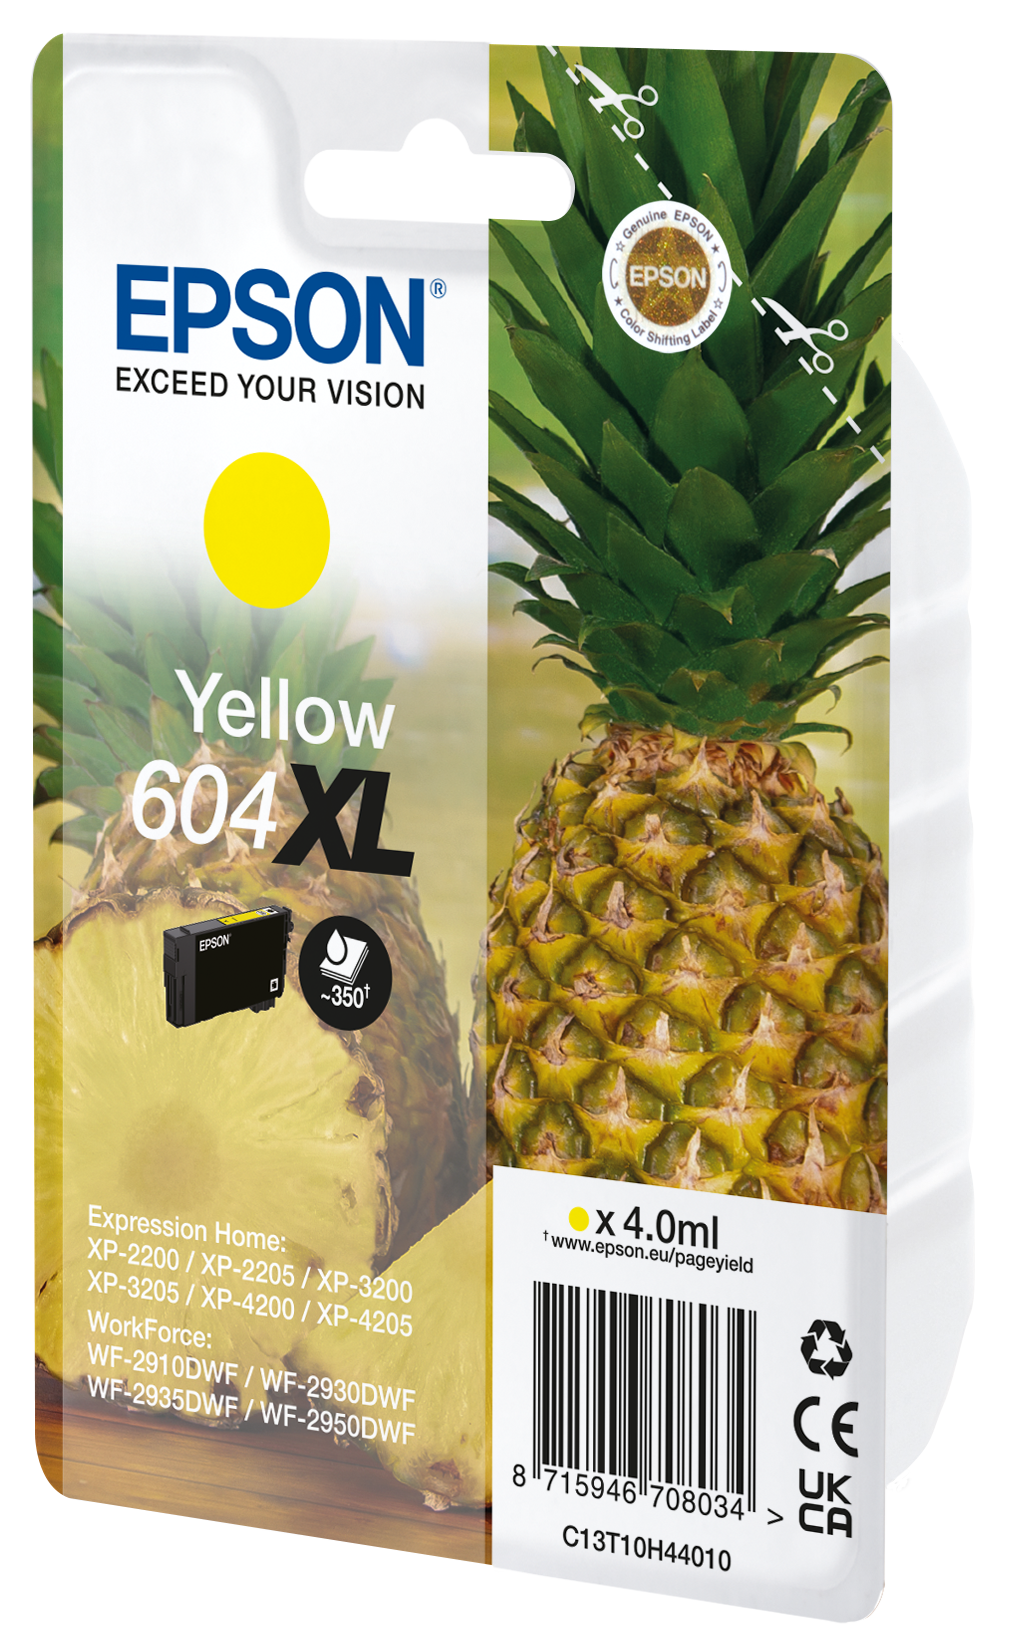 Epson 604XL single pack / geel